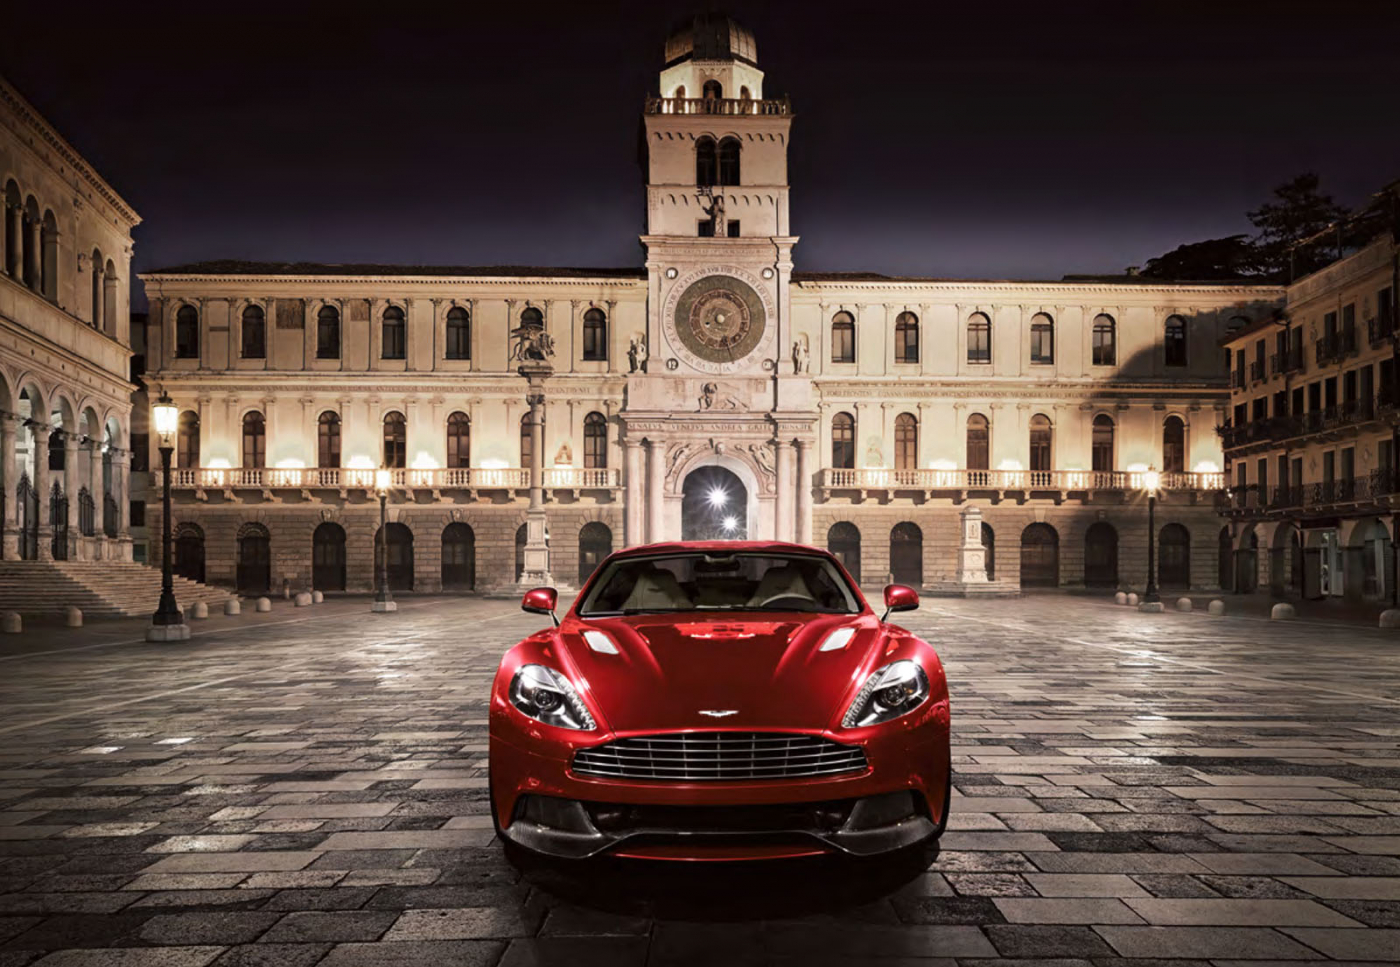 The Vanquish | The ultimate Aston Martin